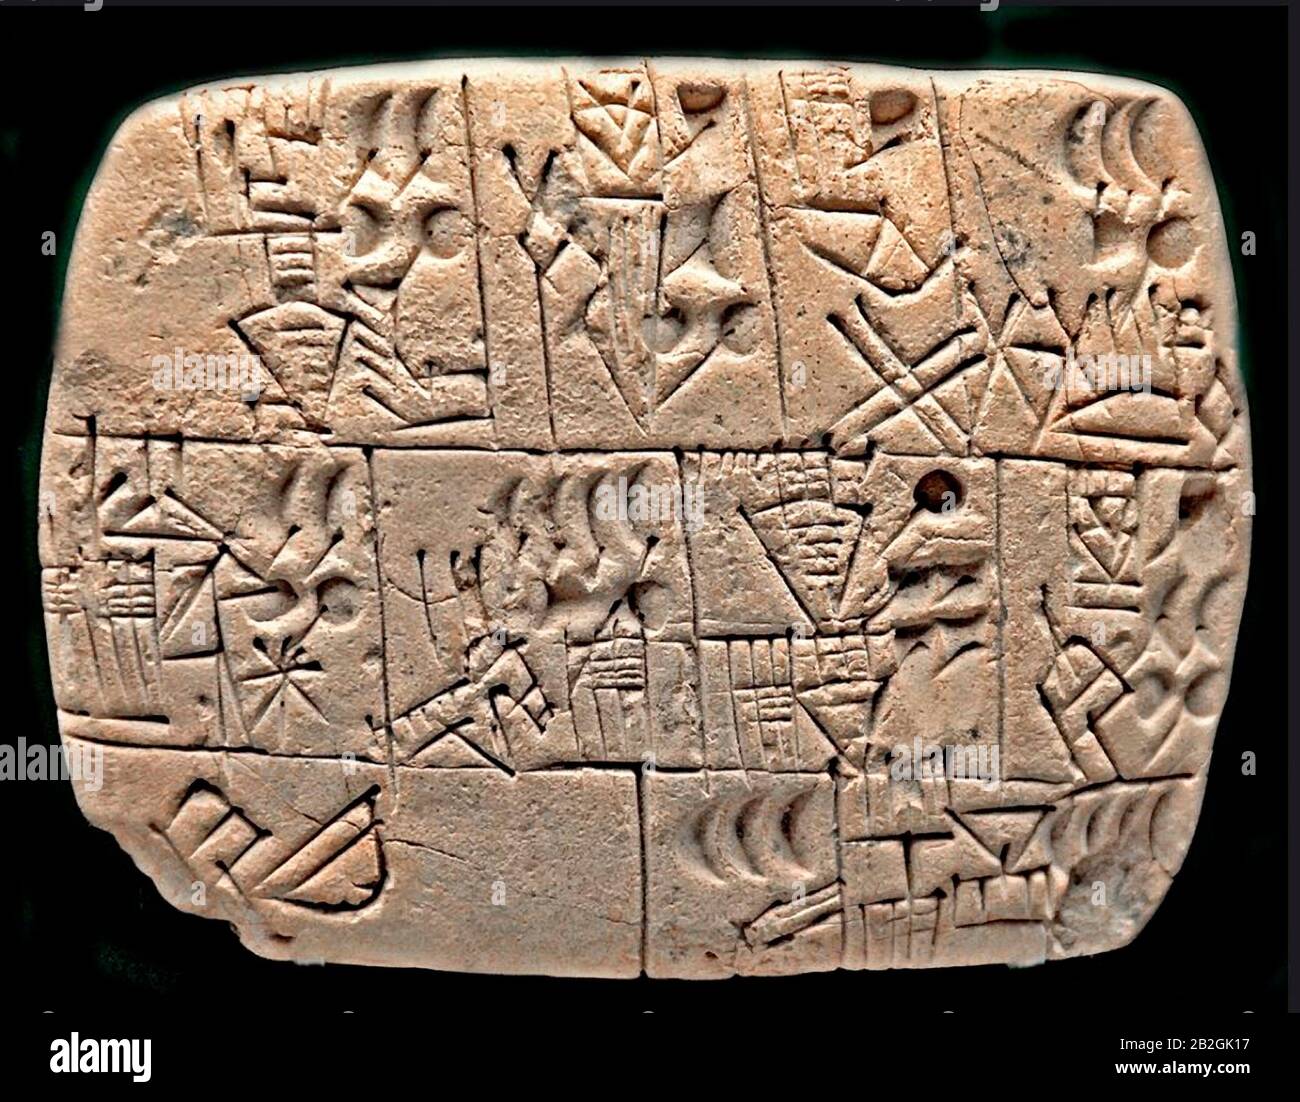 6598. Argilla con prima sculeform script, c. 3000 A.C. Uruk, Mesopotamia. Foto Stock